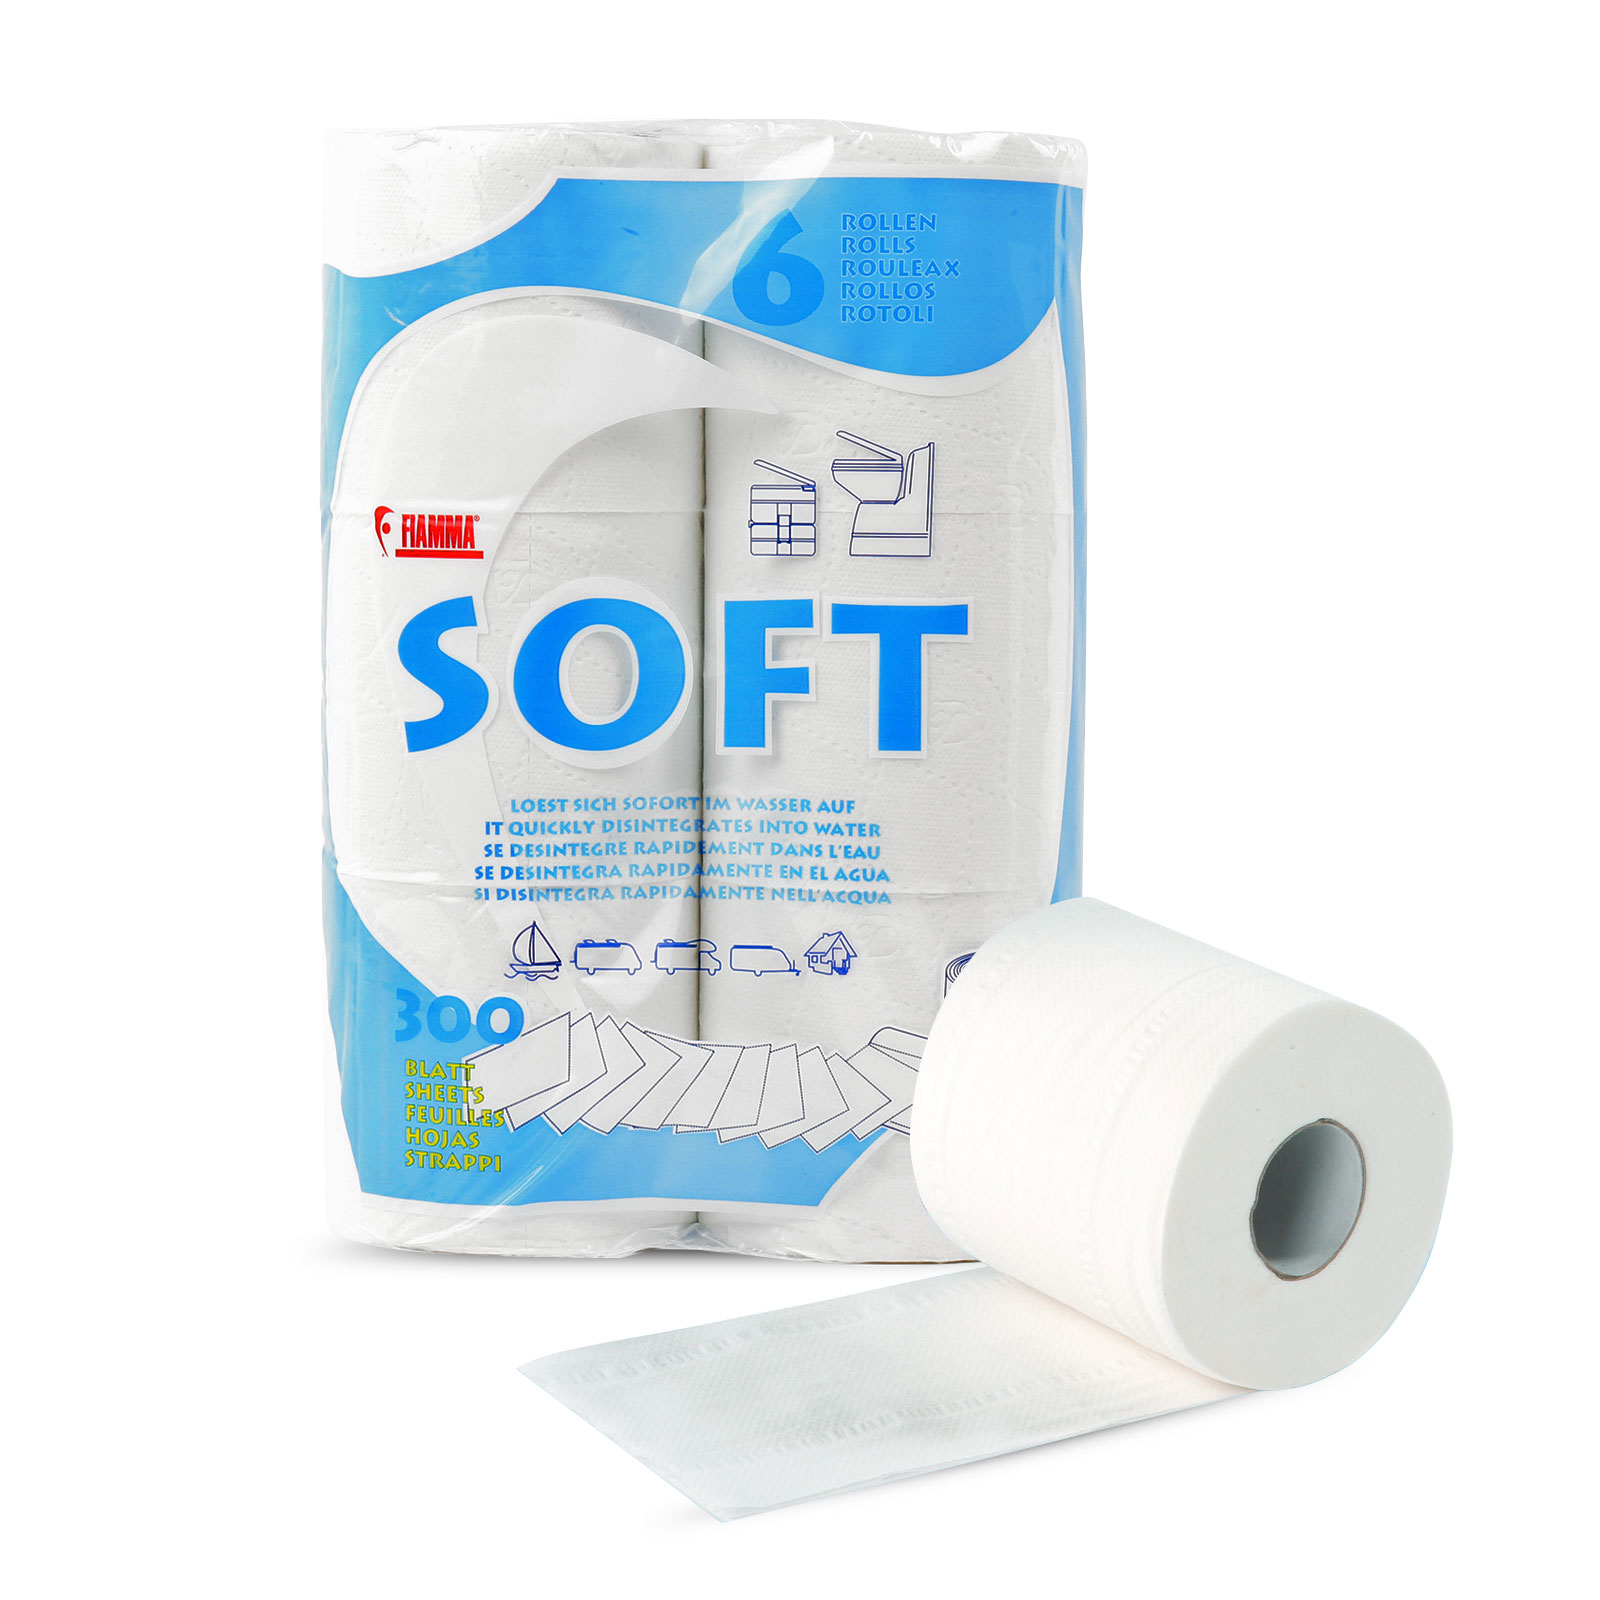 Fiamma  Soft Toilettenpapier, 6 Rollen, speziell für Campingtoiletten